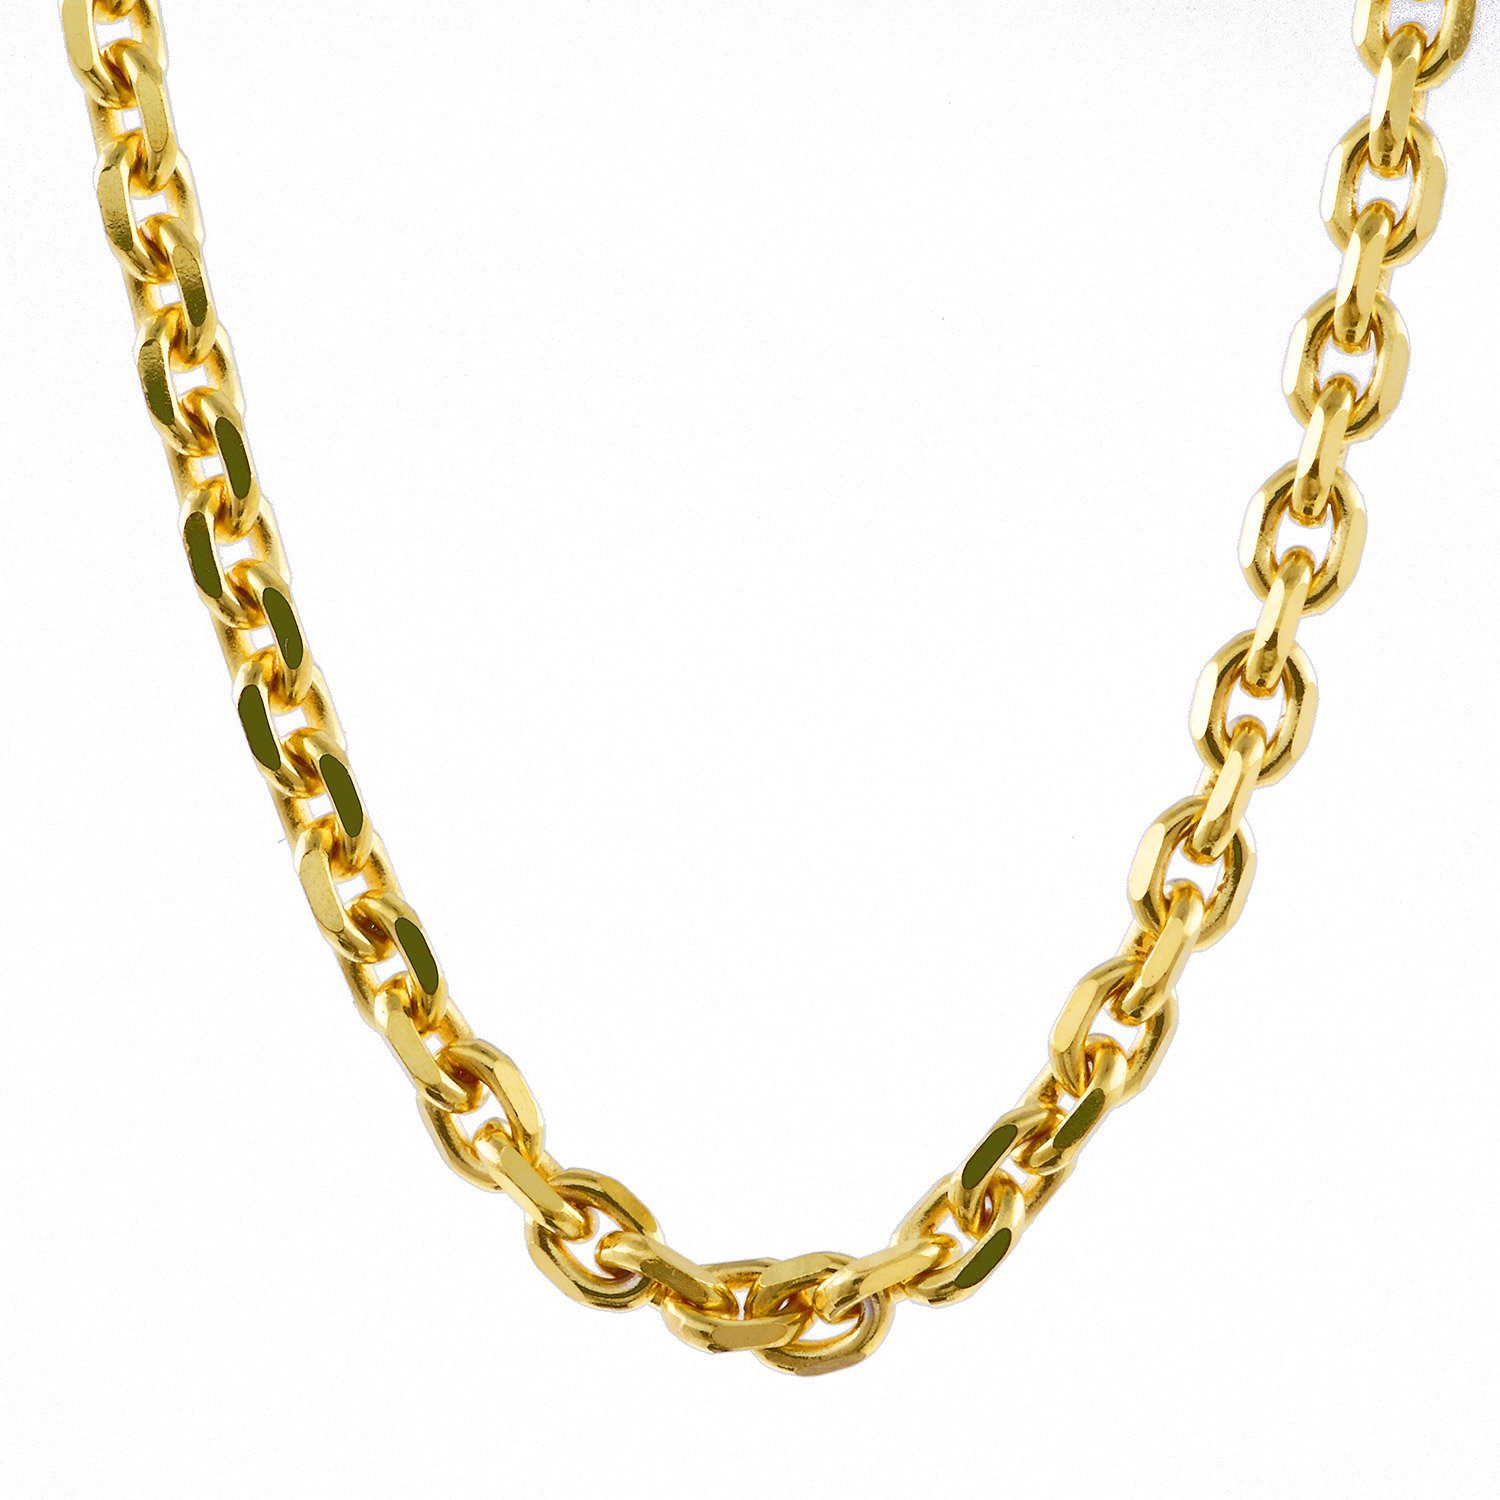 HOPLO Goldkette Ankerkette diamantiert 333 - 8 Karat Gold 1,7 mm  Kettenlänge 45 cm, Made in Germany